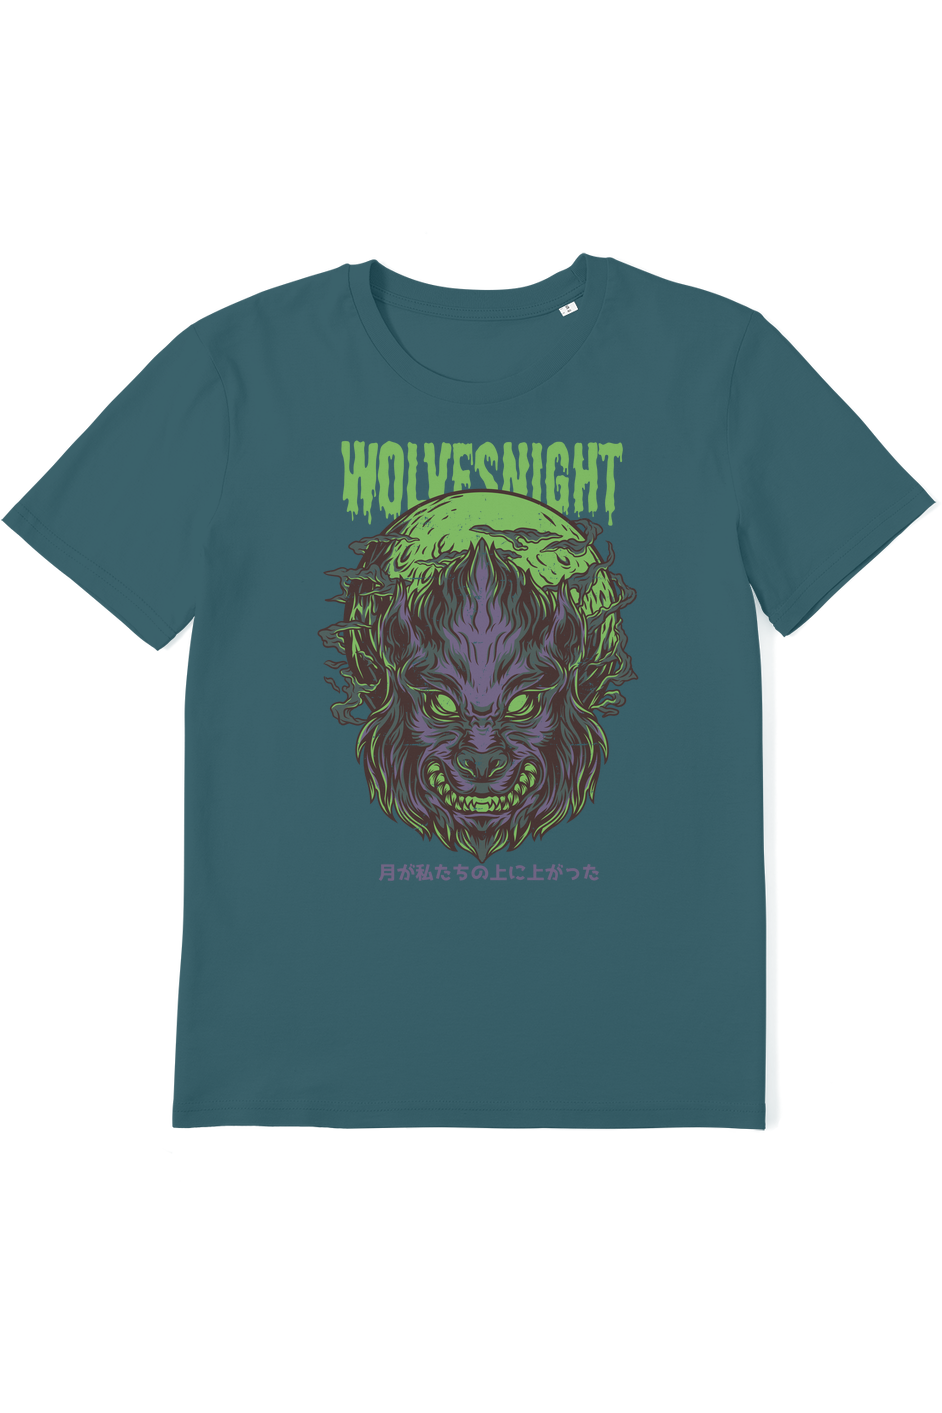 Wolves Night Organic T-Shirt vegan, sustainable, organic streetwear, - TRVTH ORGANIC CLOTHING